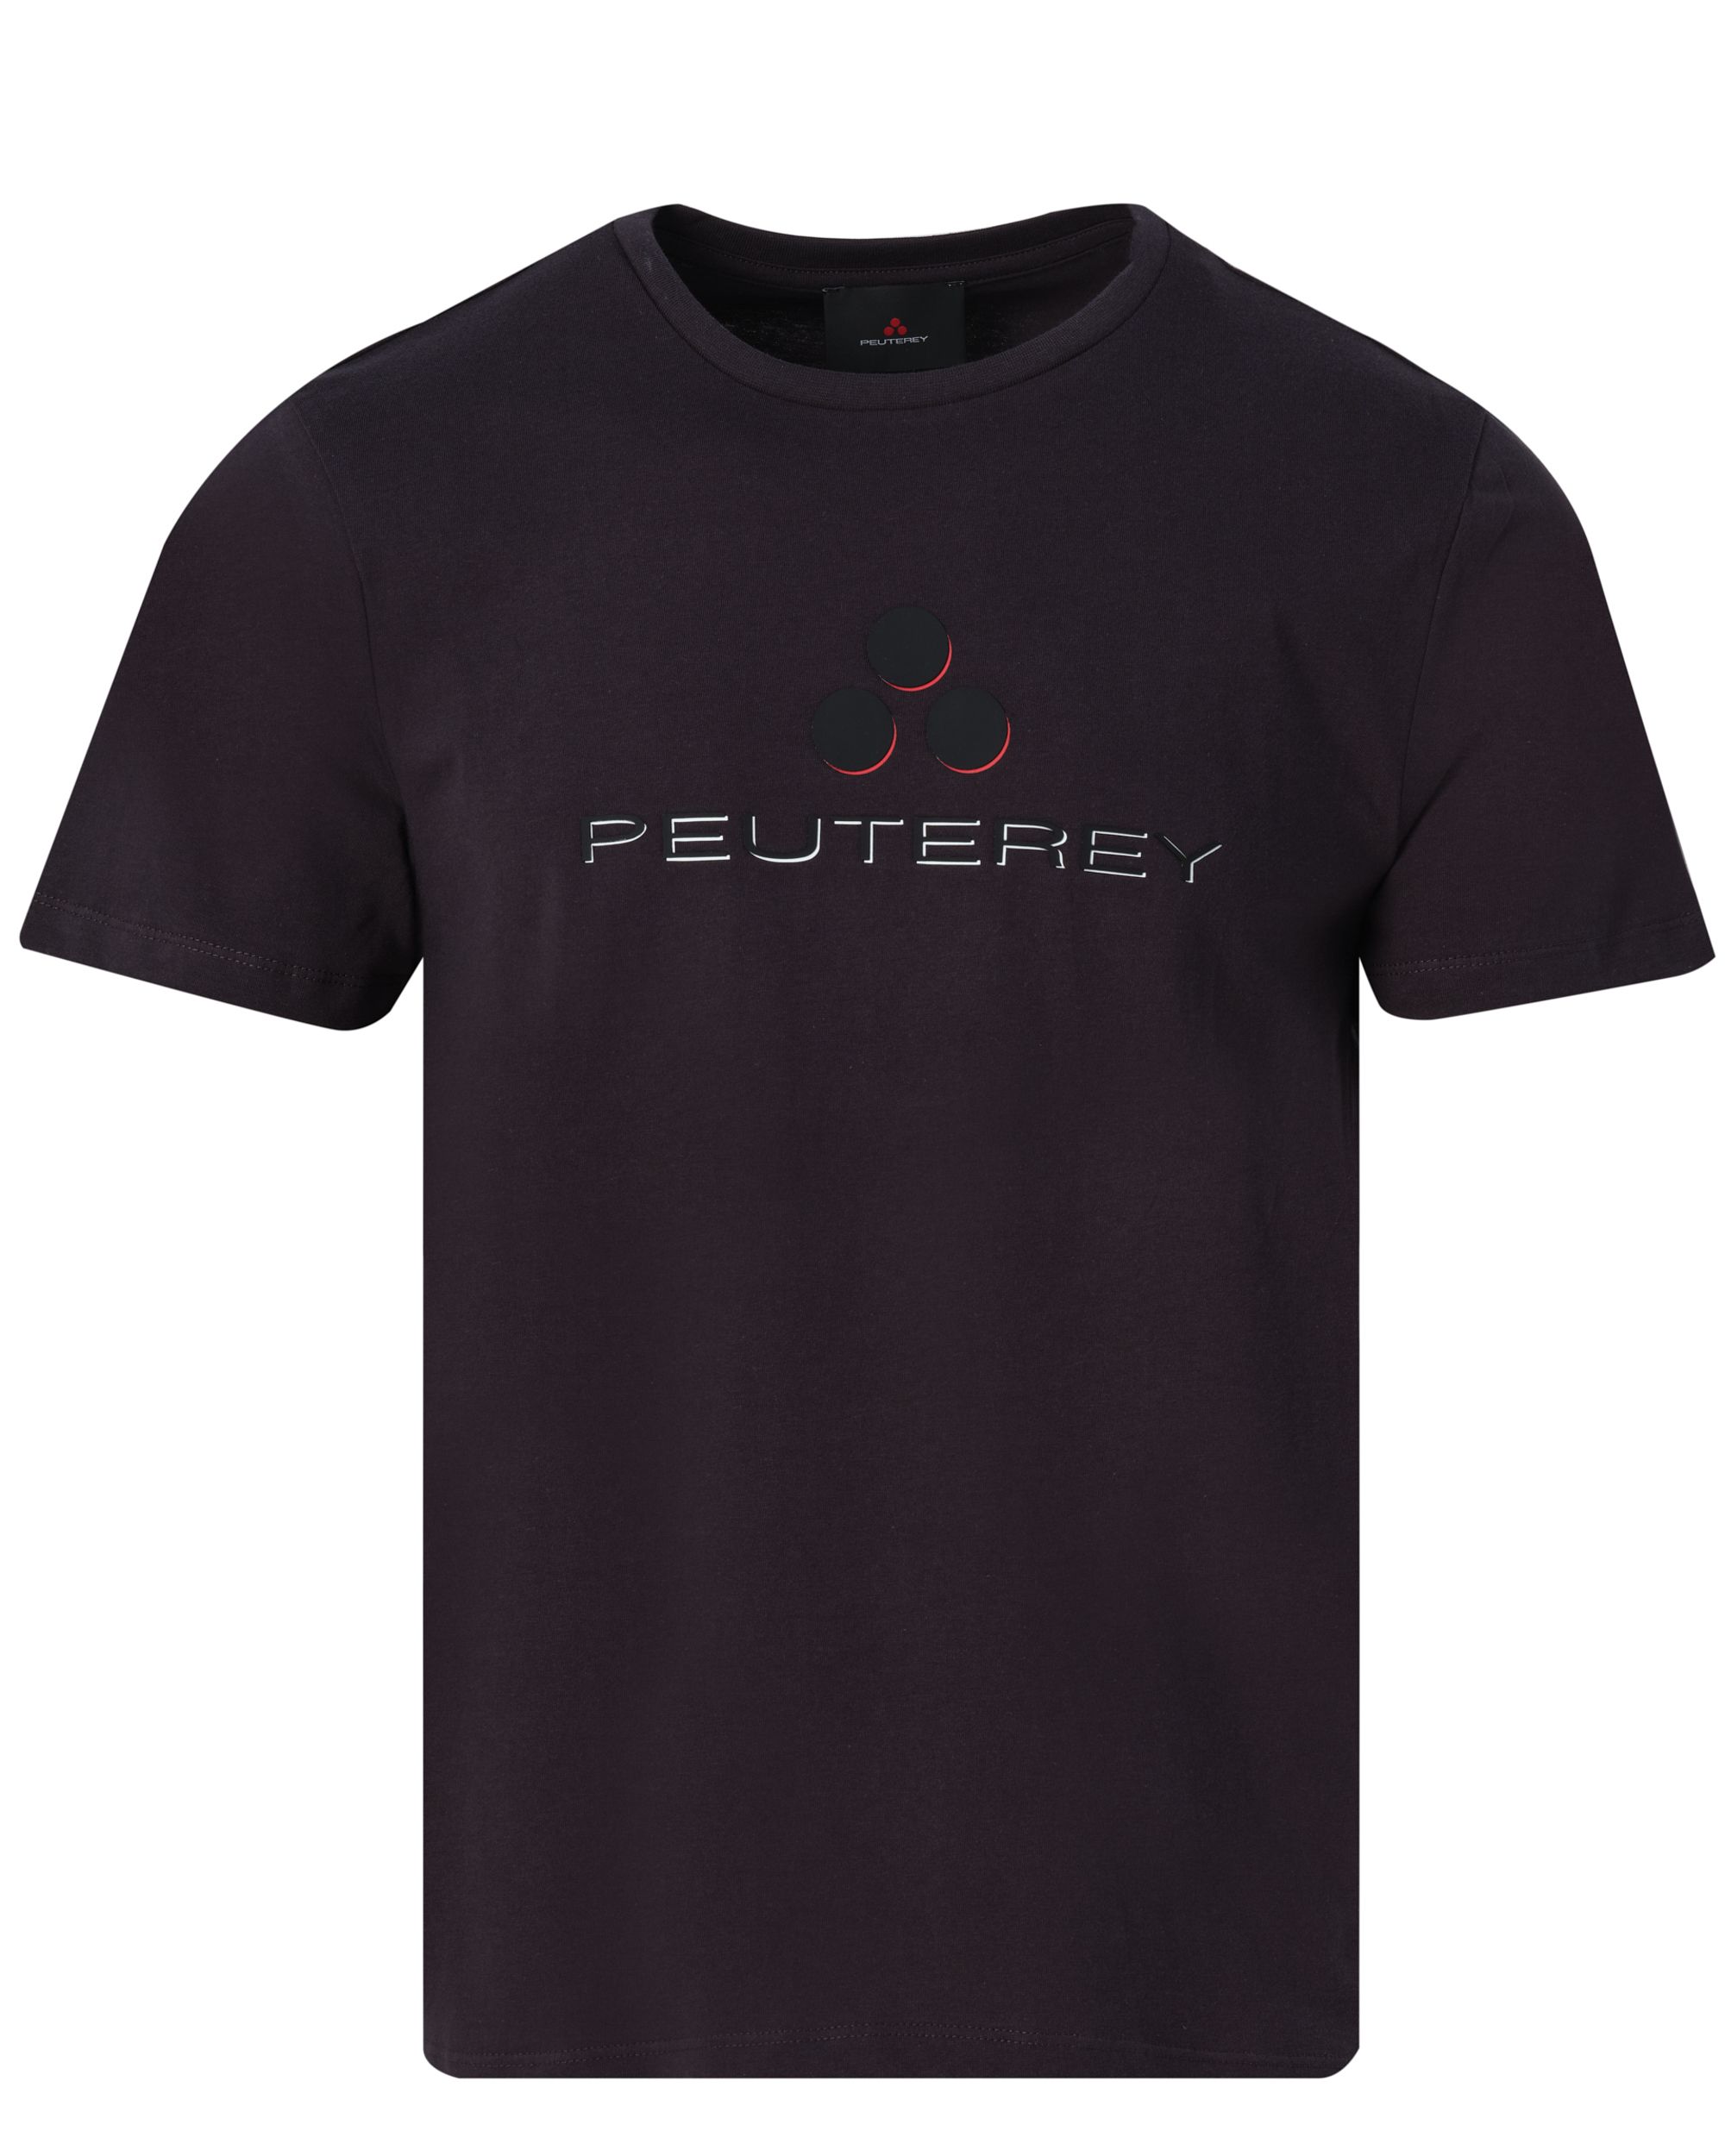 Peuterey T-shirt KM Donker blauw 083991-001-L